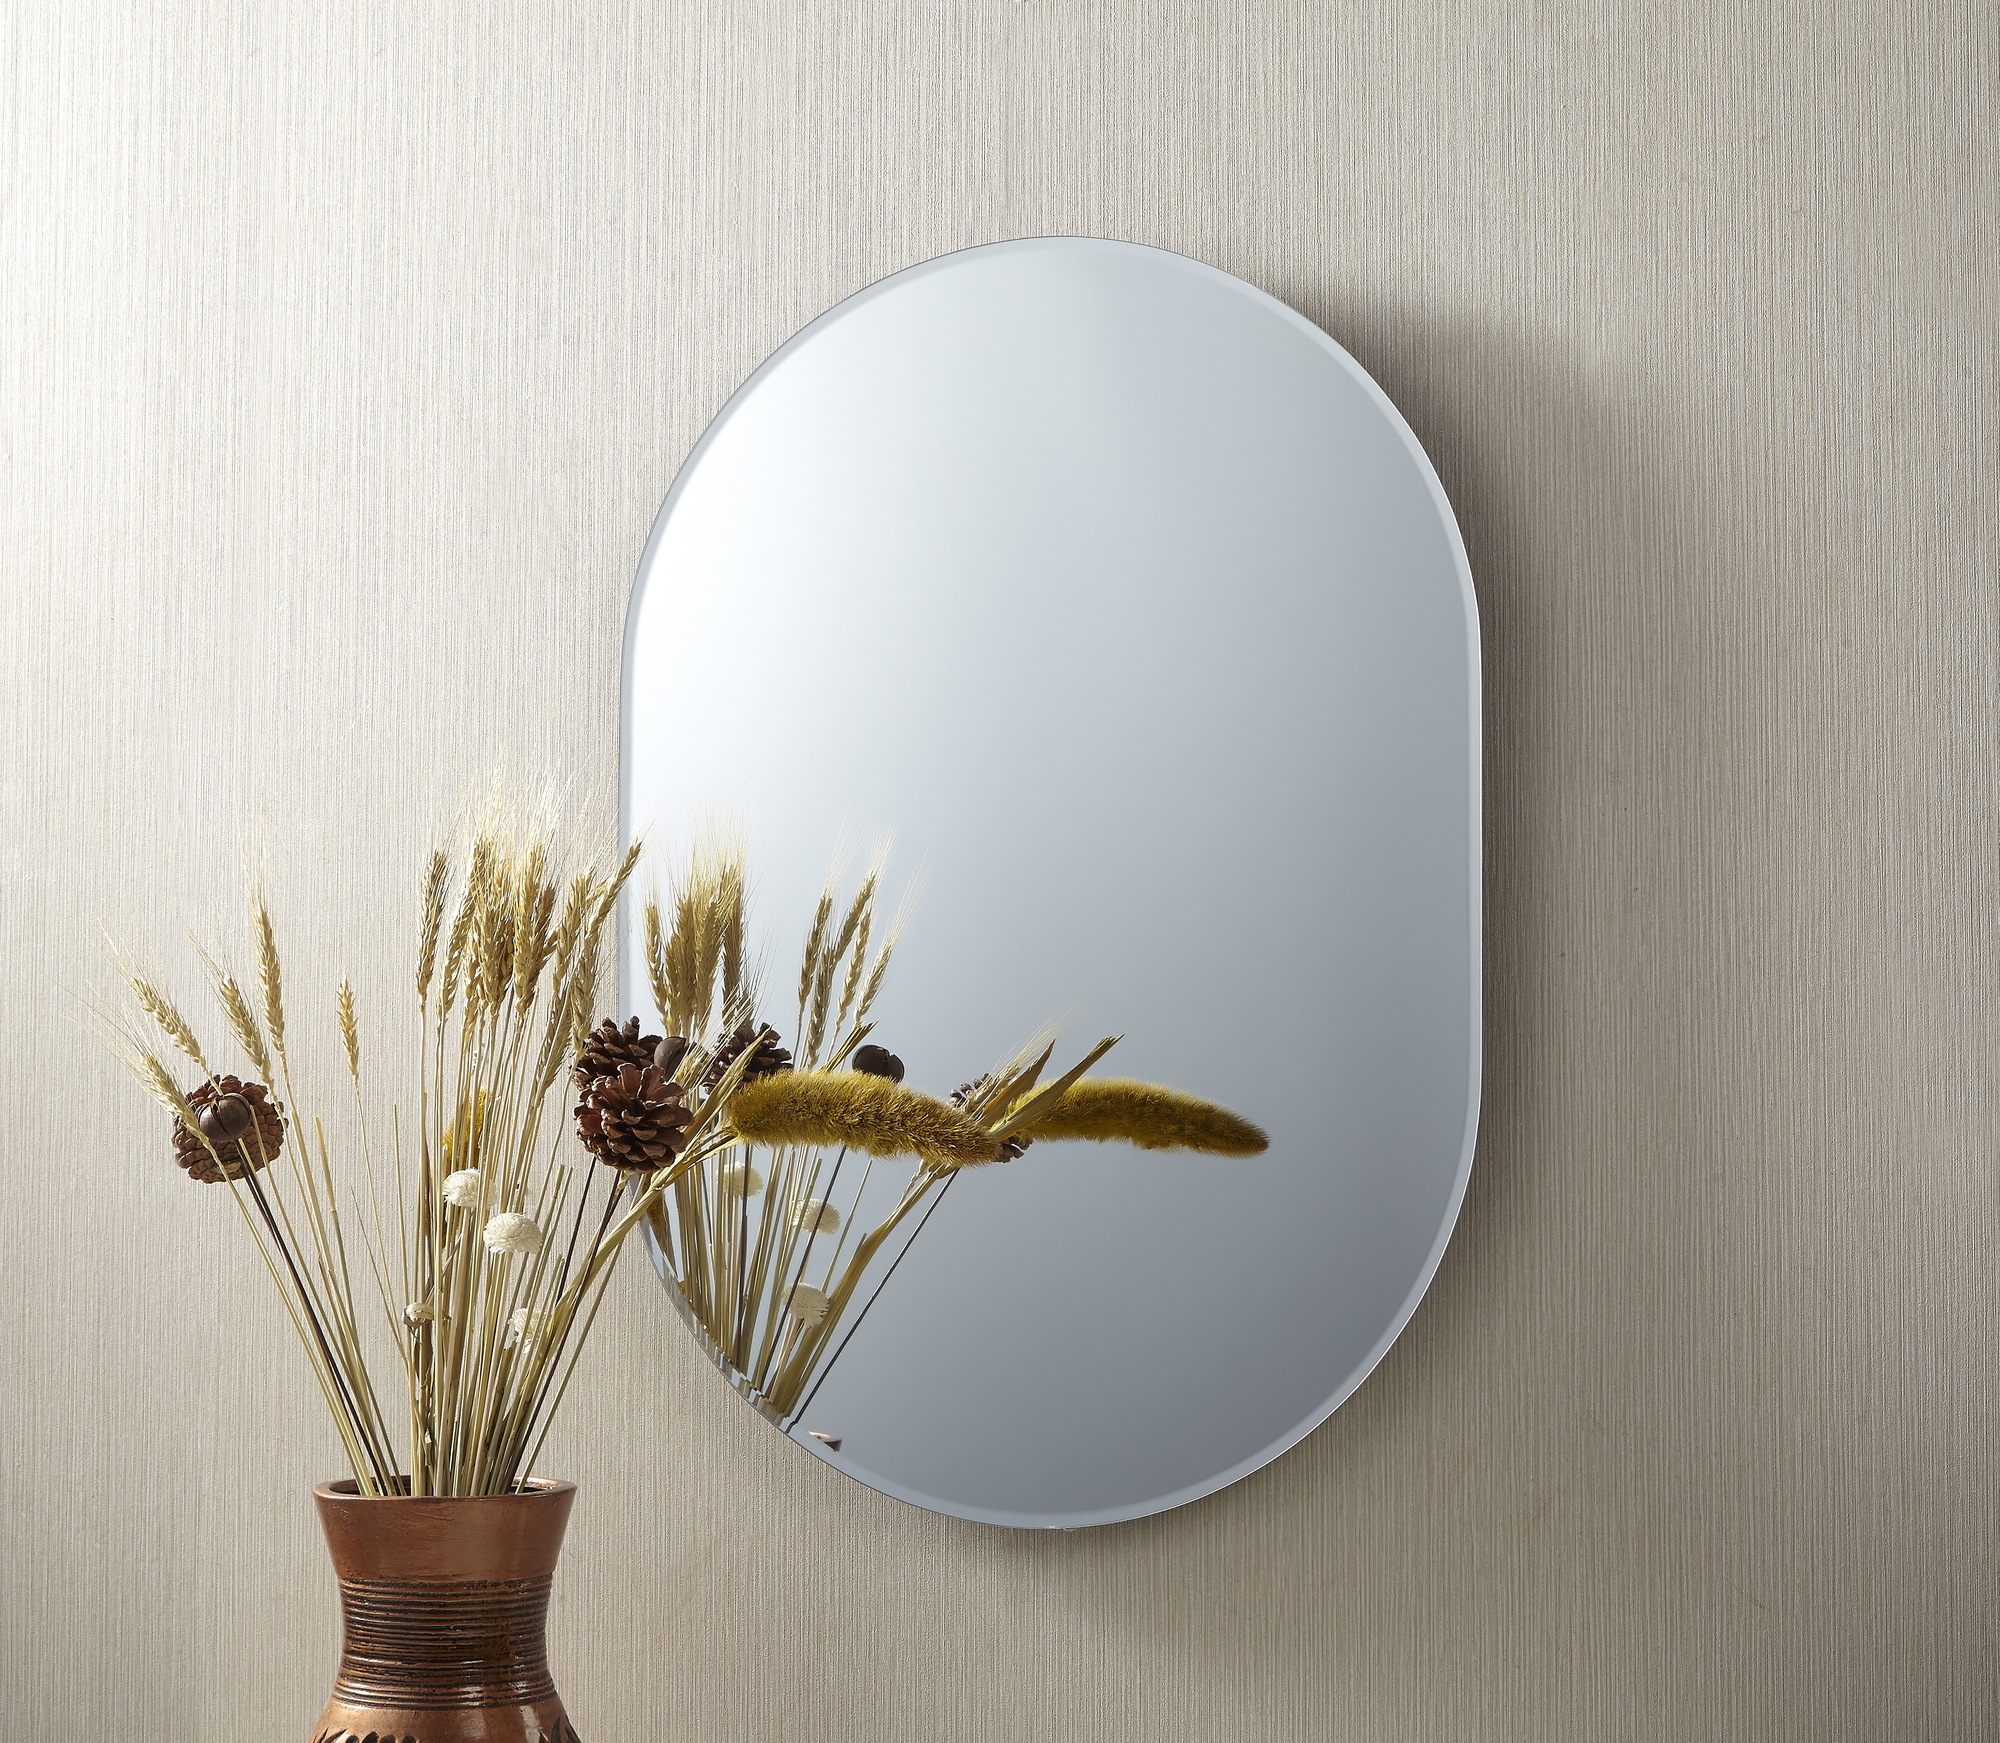 Hardy Frameless Oval Mirror 50cm X 70cm, Frameless Oval Beveled Bathroom Mirror